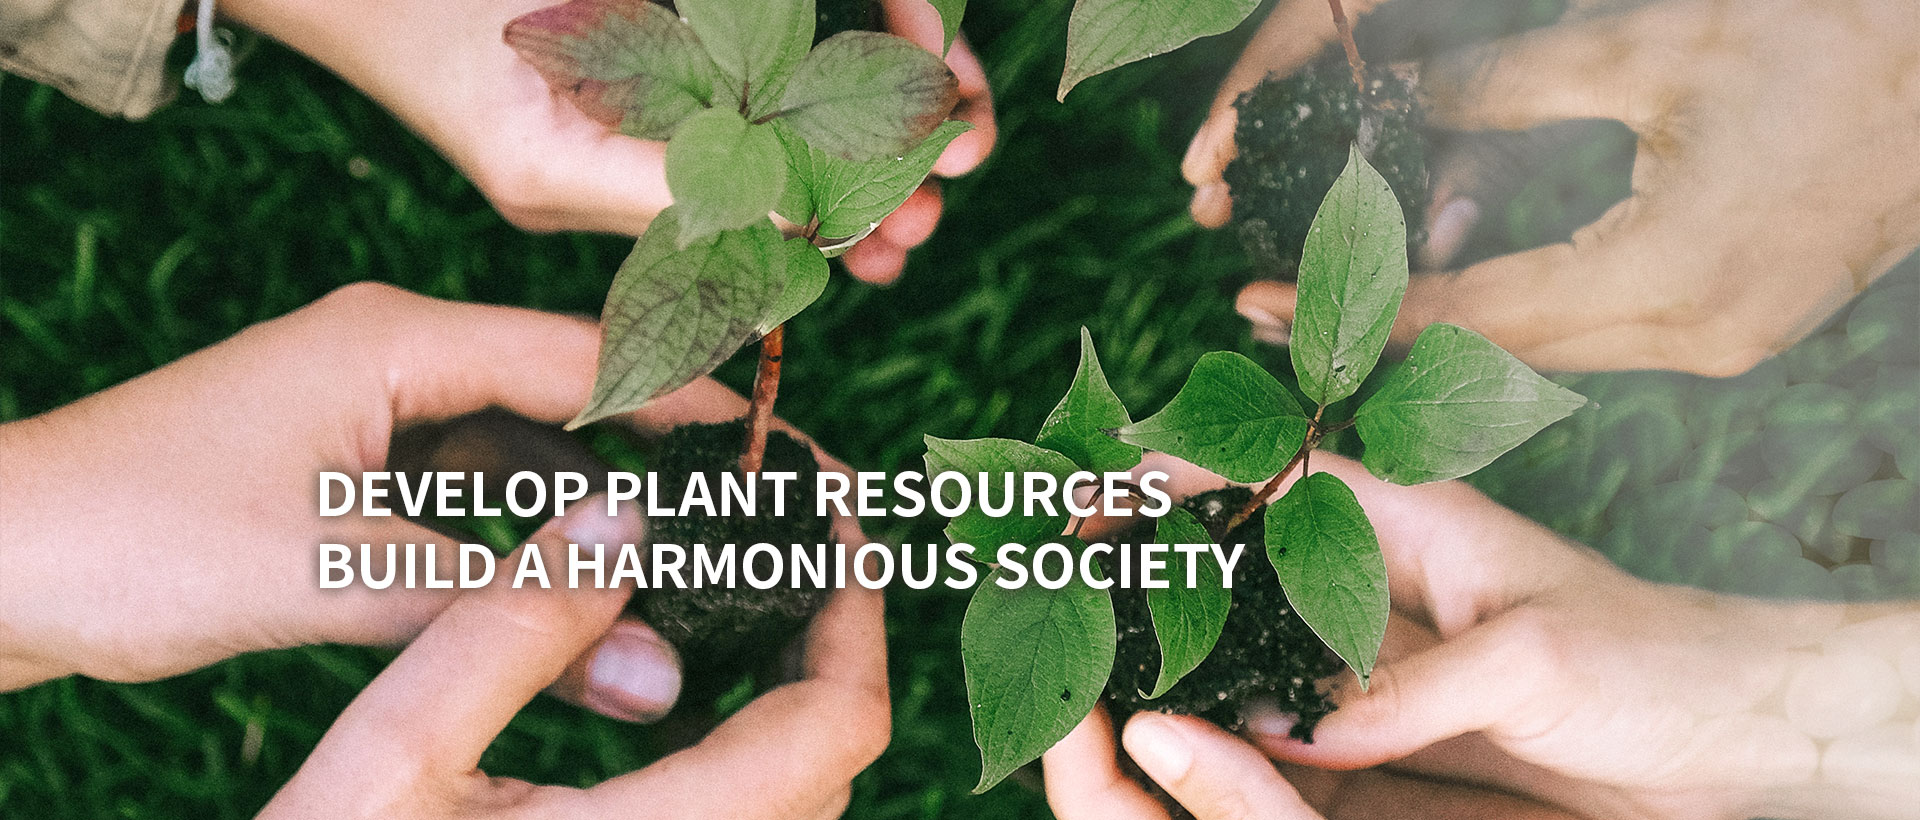 Develop plant resources, build a harmonious society 